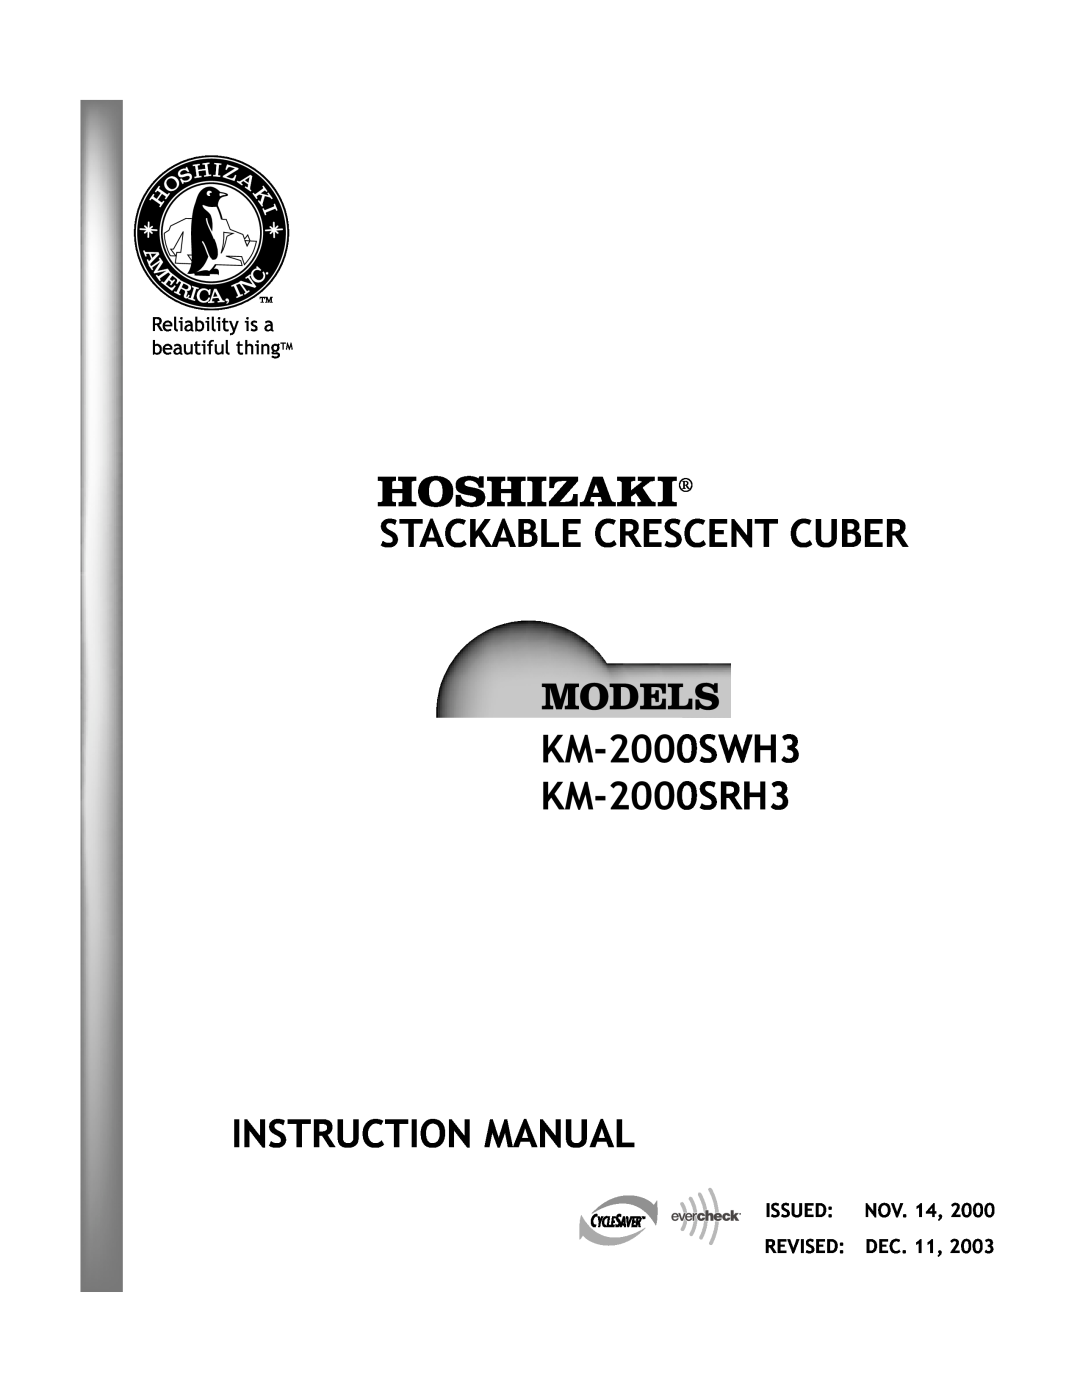 Hoshizaki service manual MODEL KM-2000SWF3 KM-2000SRF3 KM-2000SWH3 KM-2000SRH3, Hoshizaki Stackable Crescent Cuber, Oct 